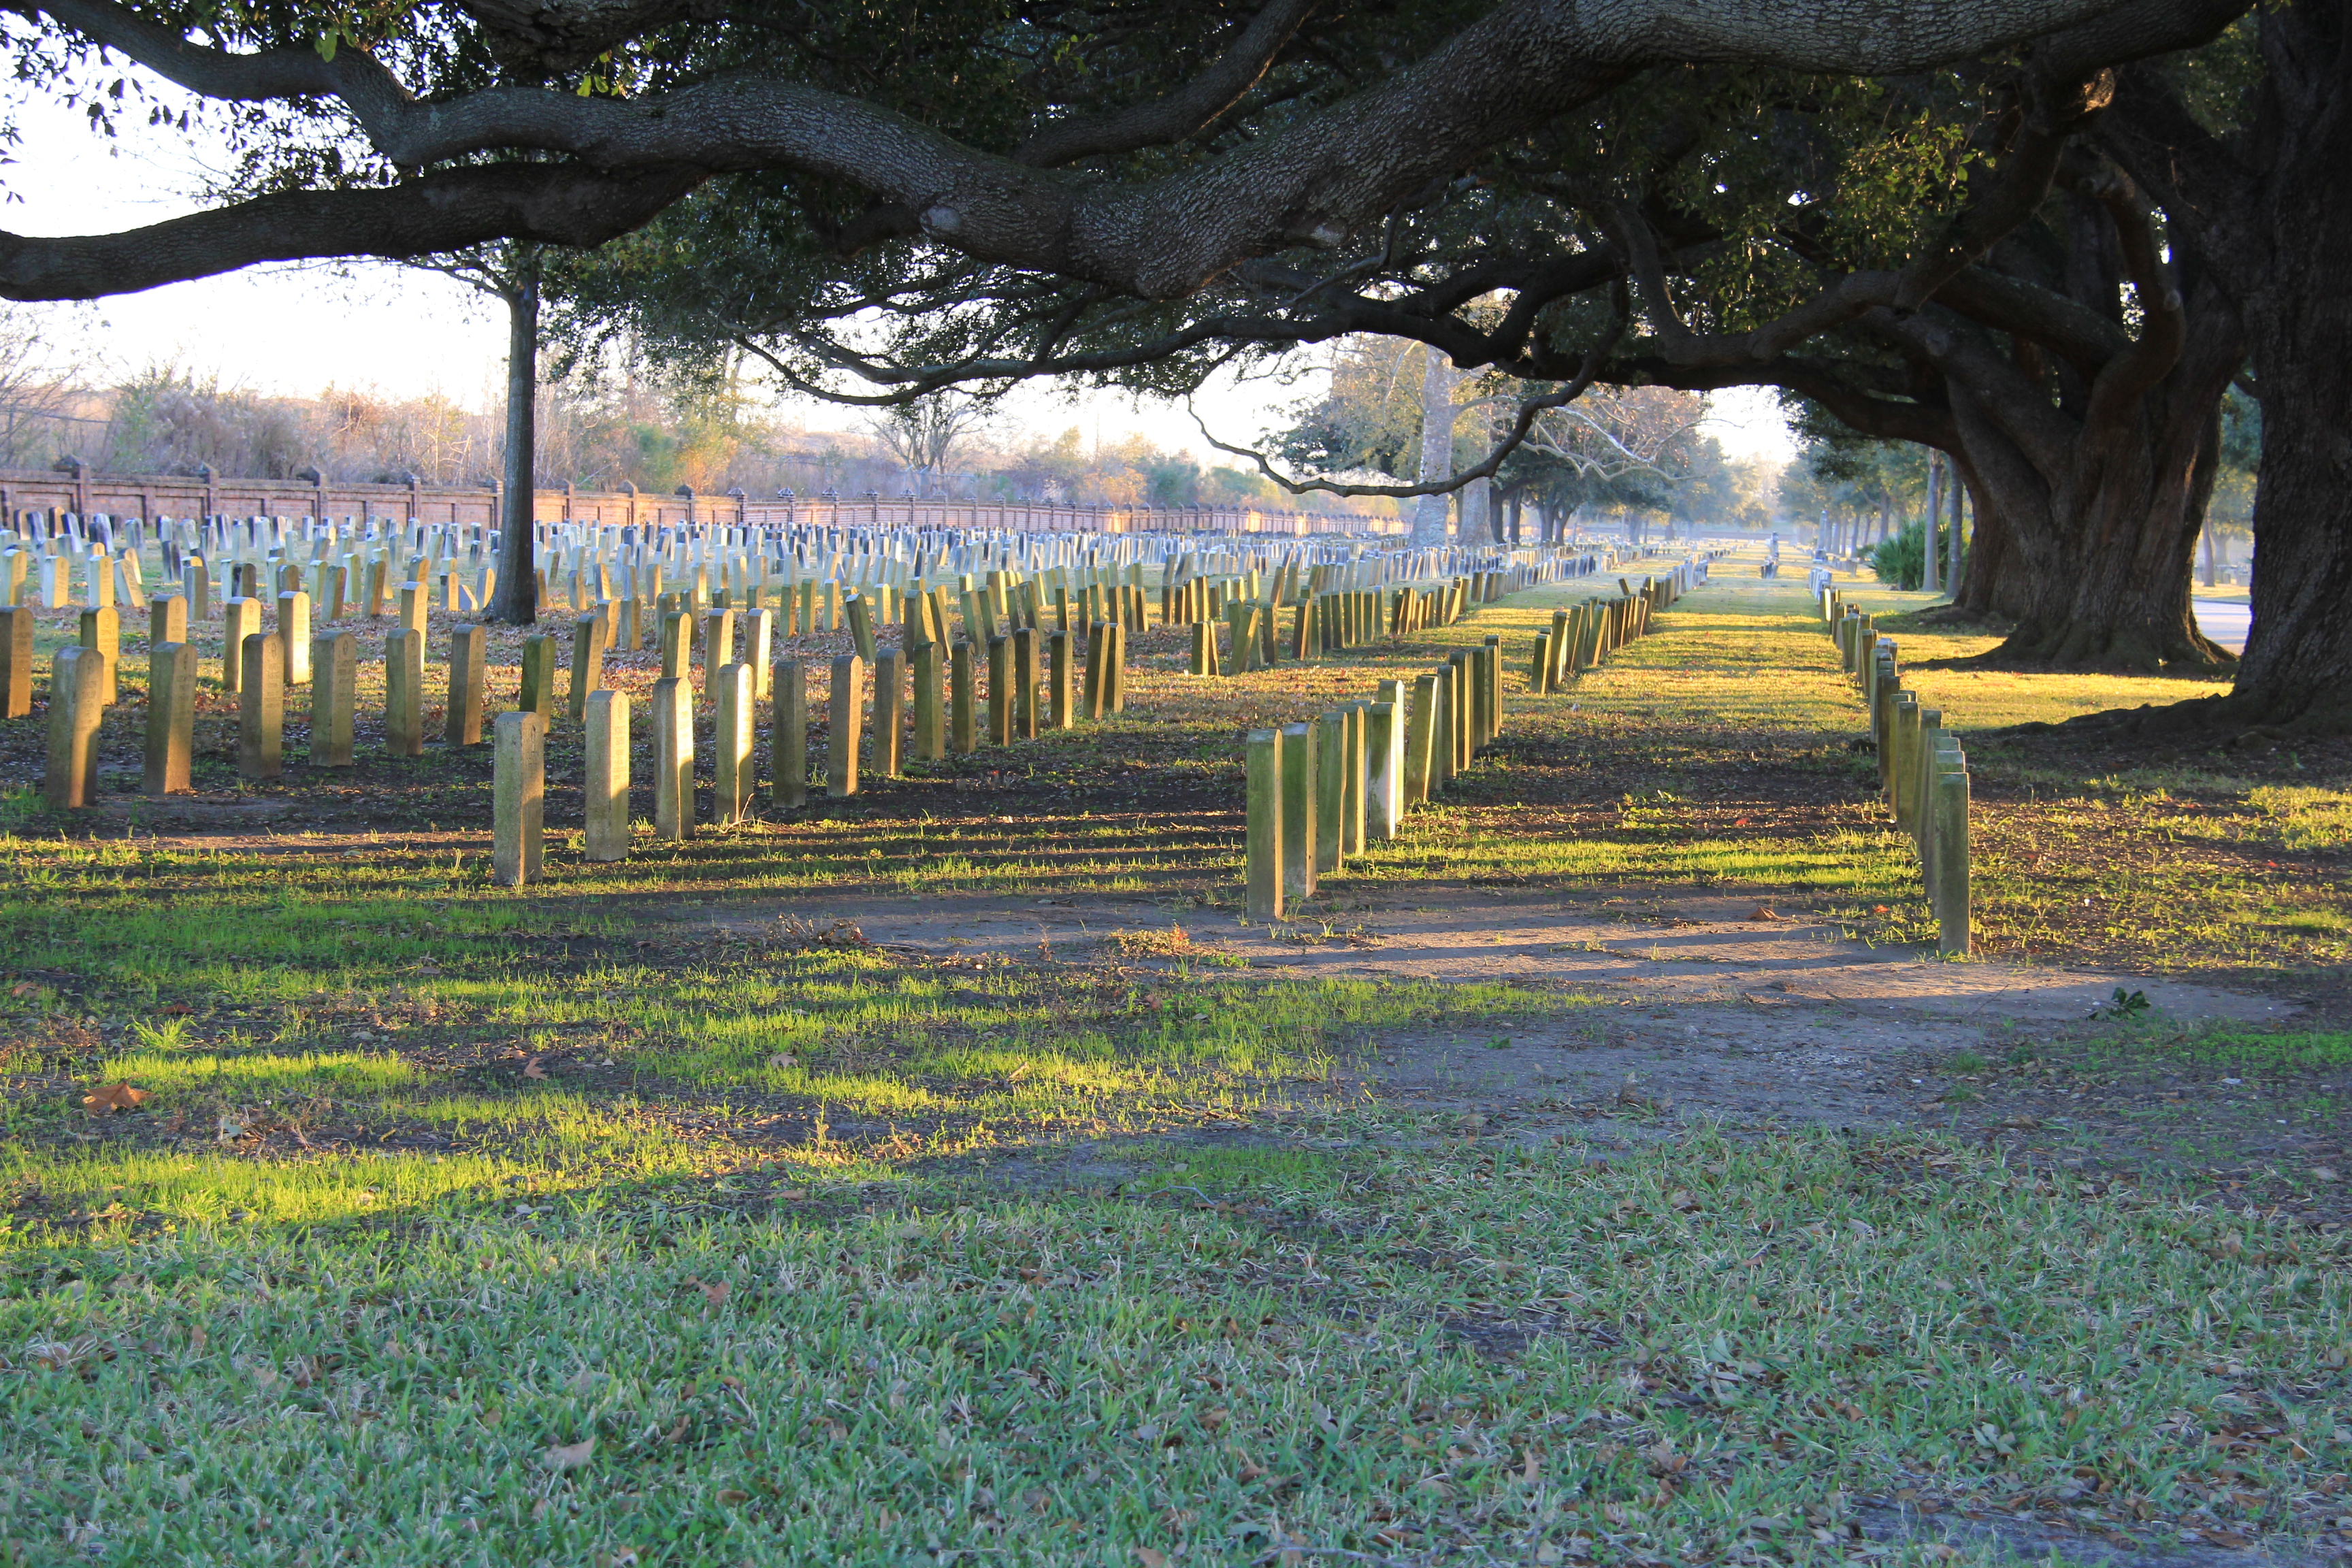 Setting sun lights up cemetery headstones